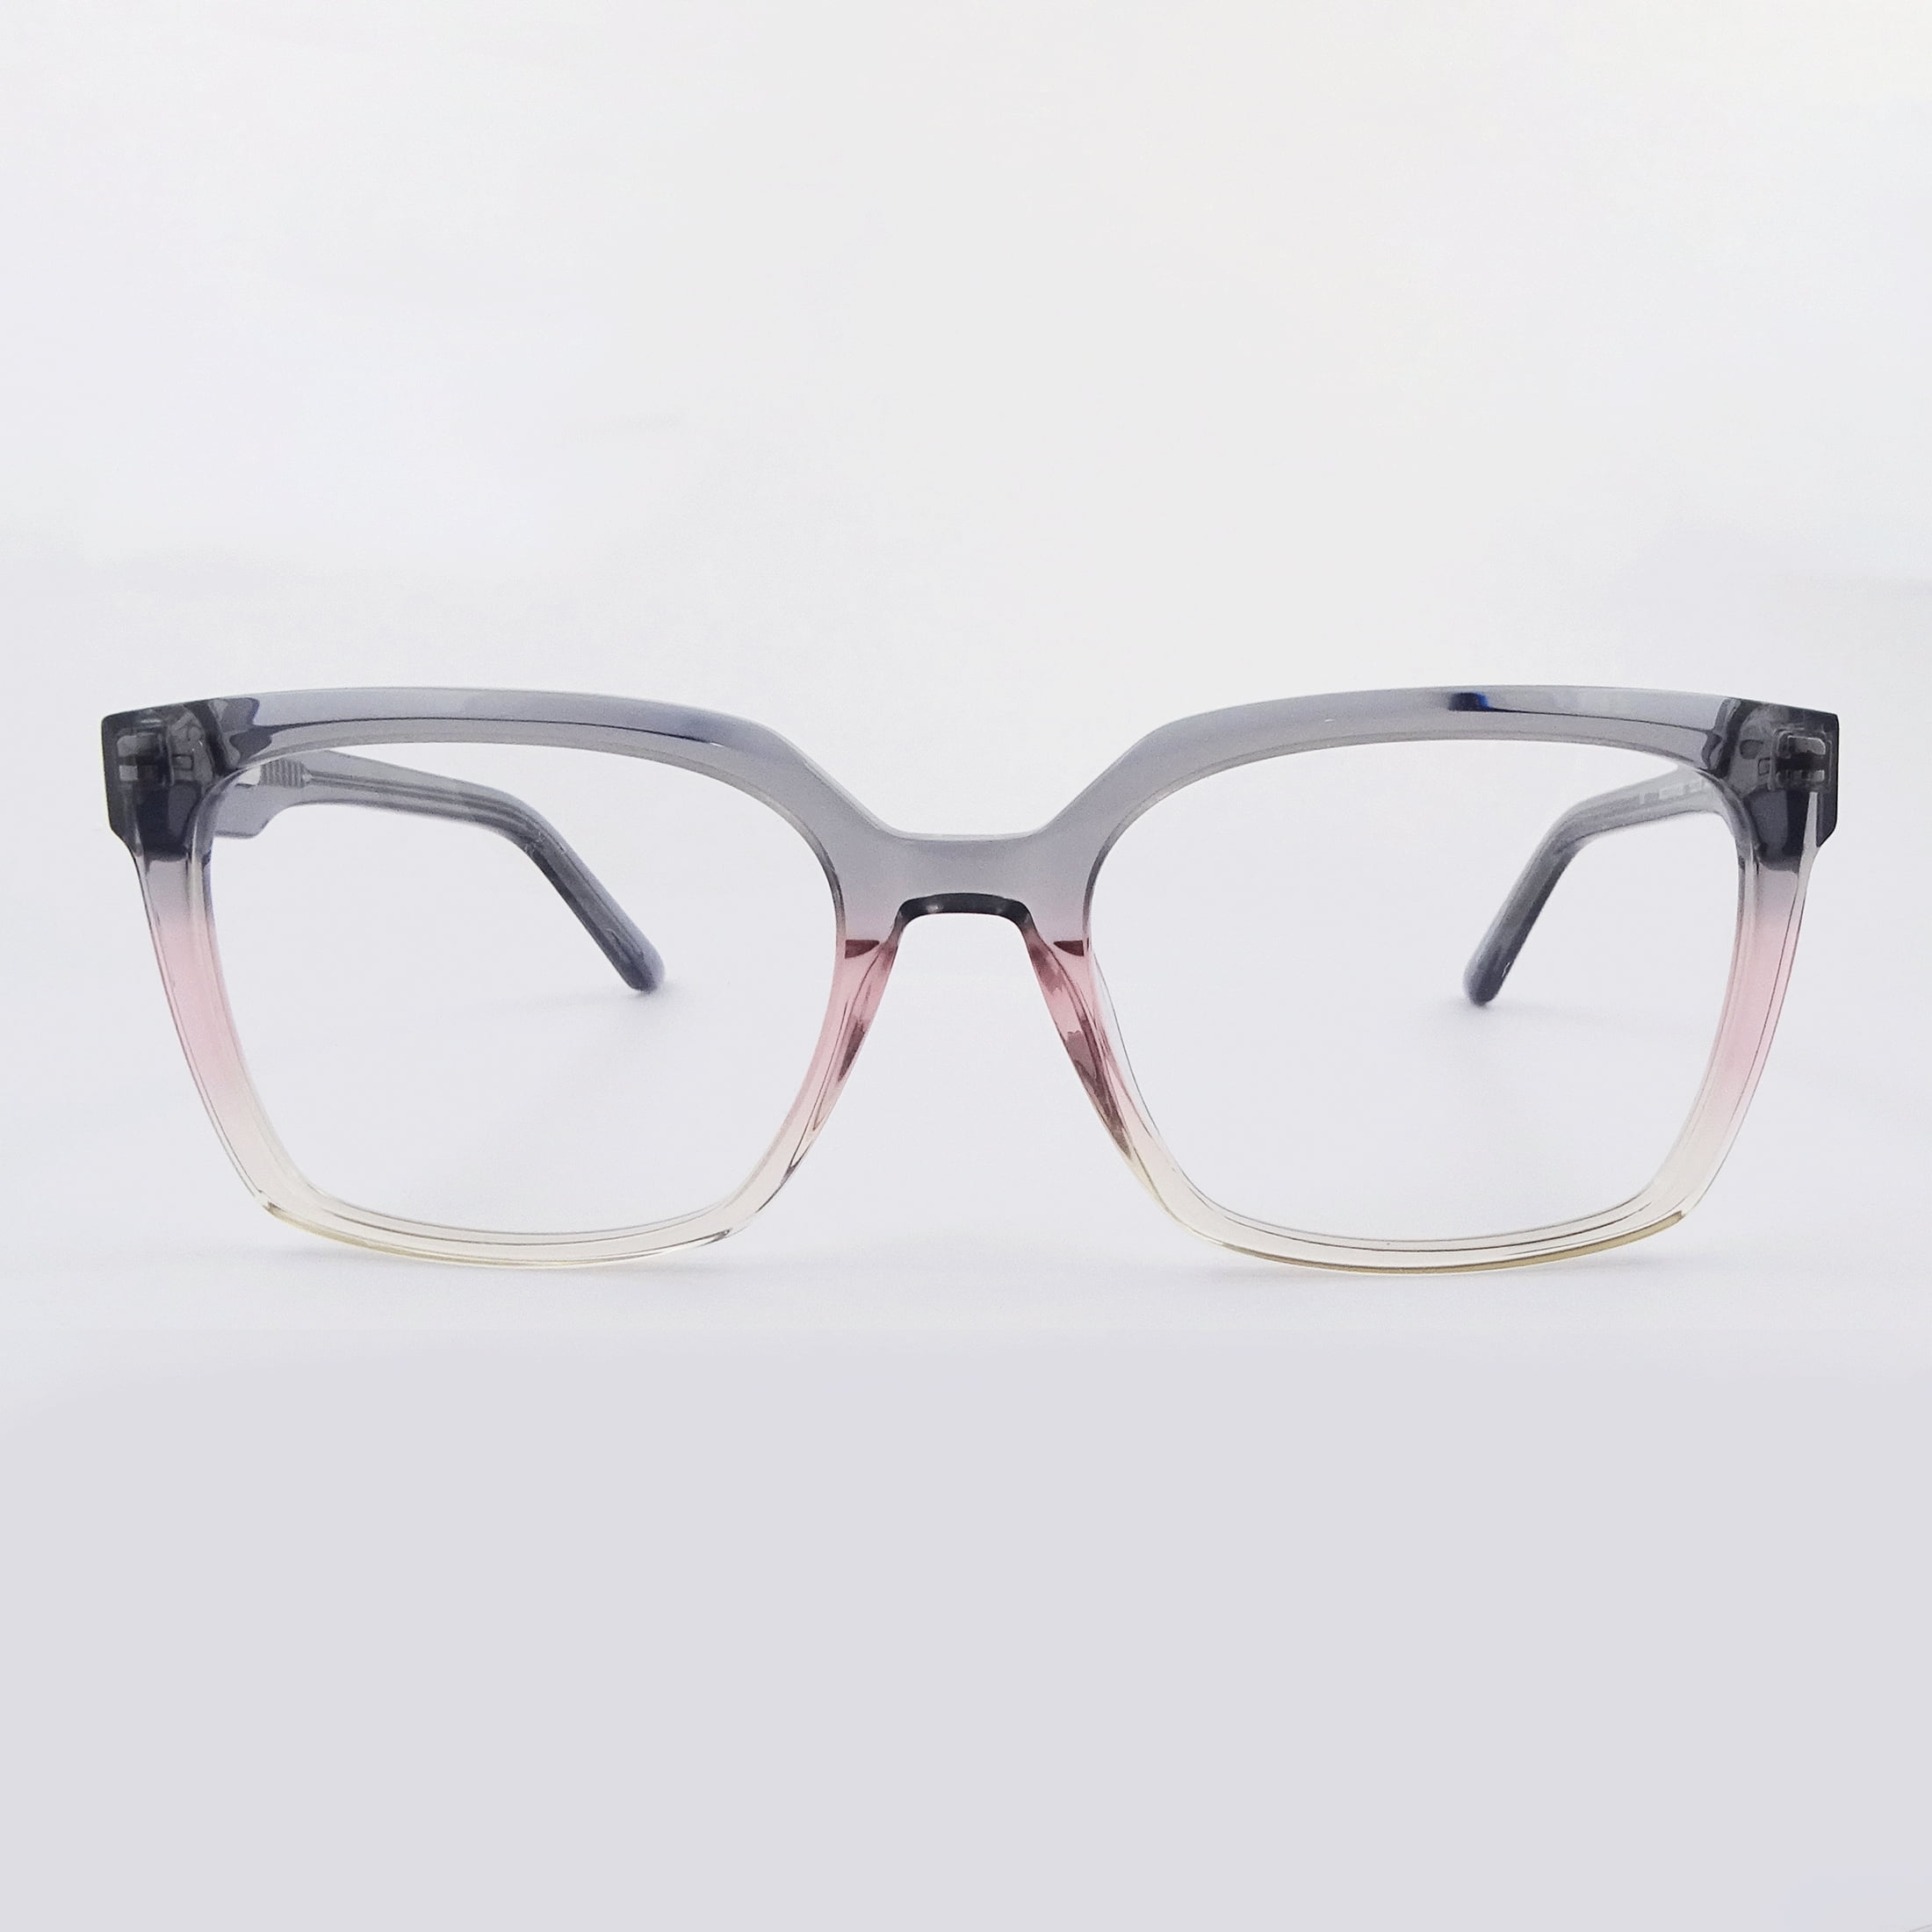 Walmart Women's Square Eyeglasses, MC014 Nyobi, Gray Pink, with Case